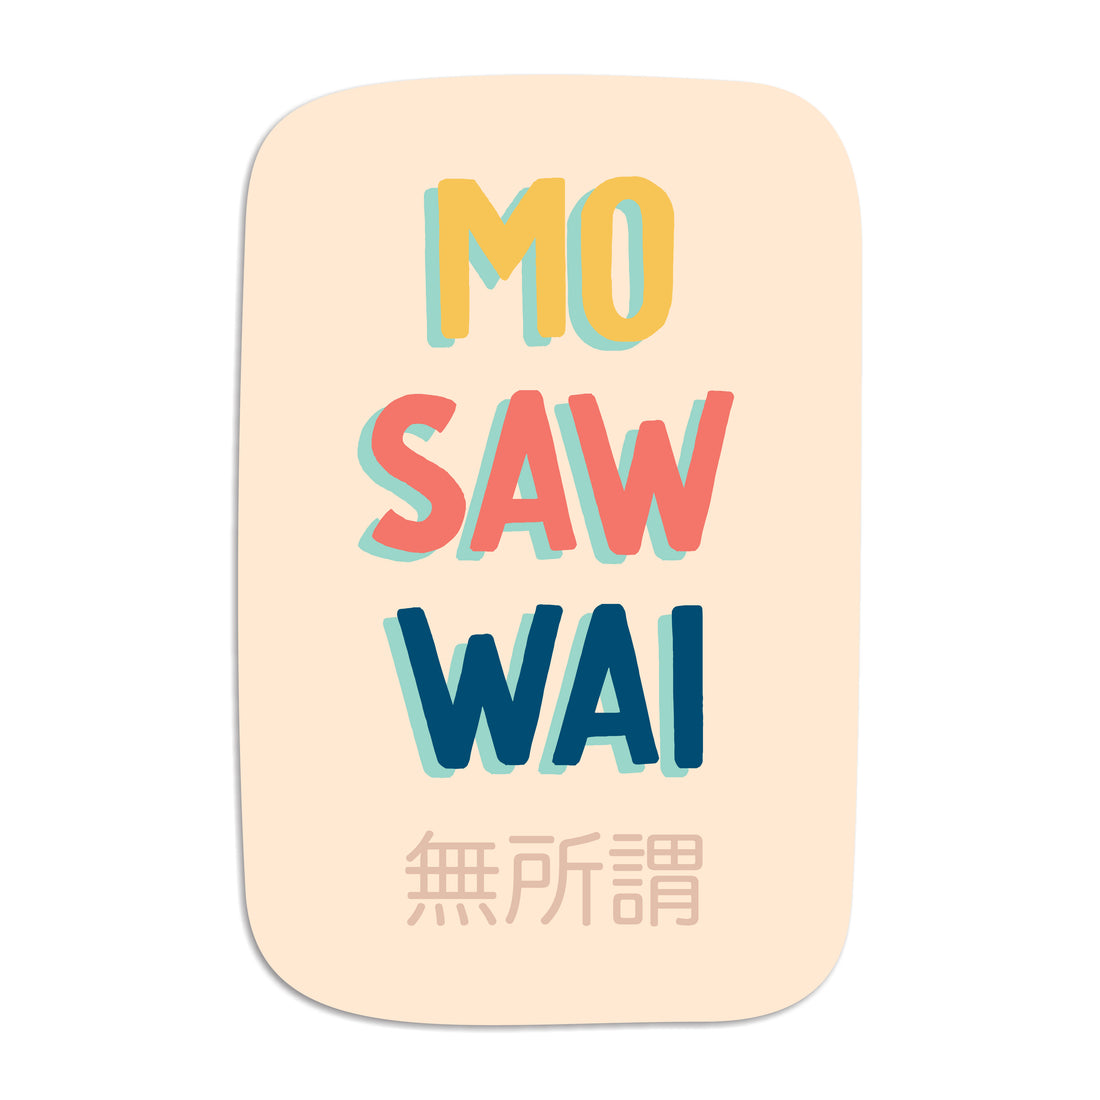 Mo saw wai (無所謂) vinyl sticker by I&